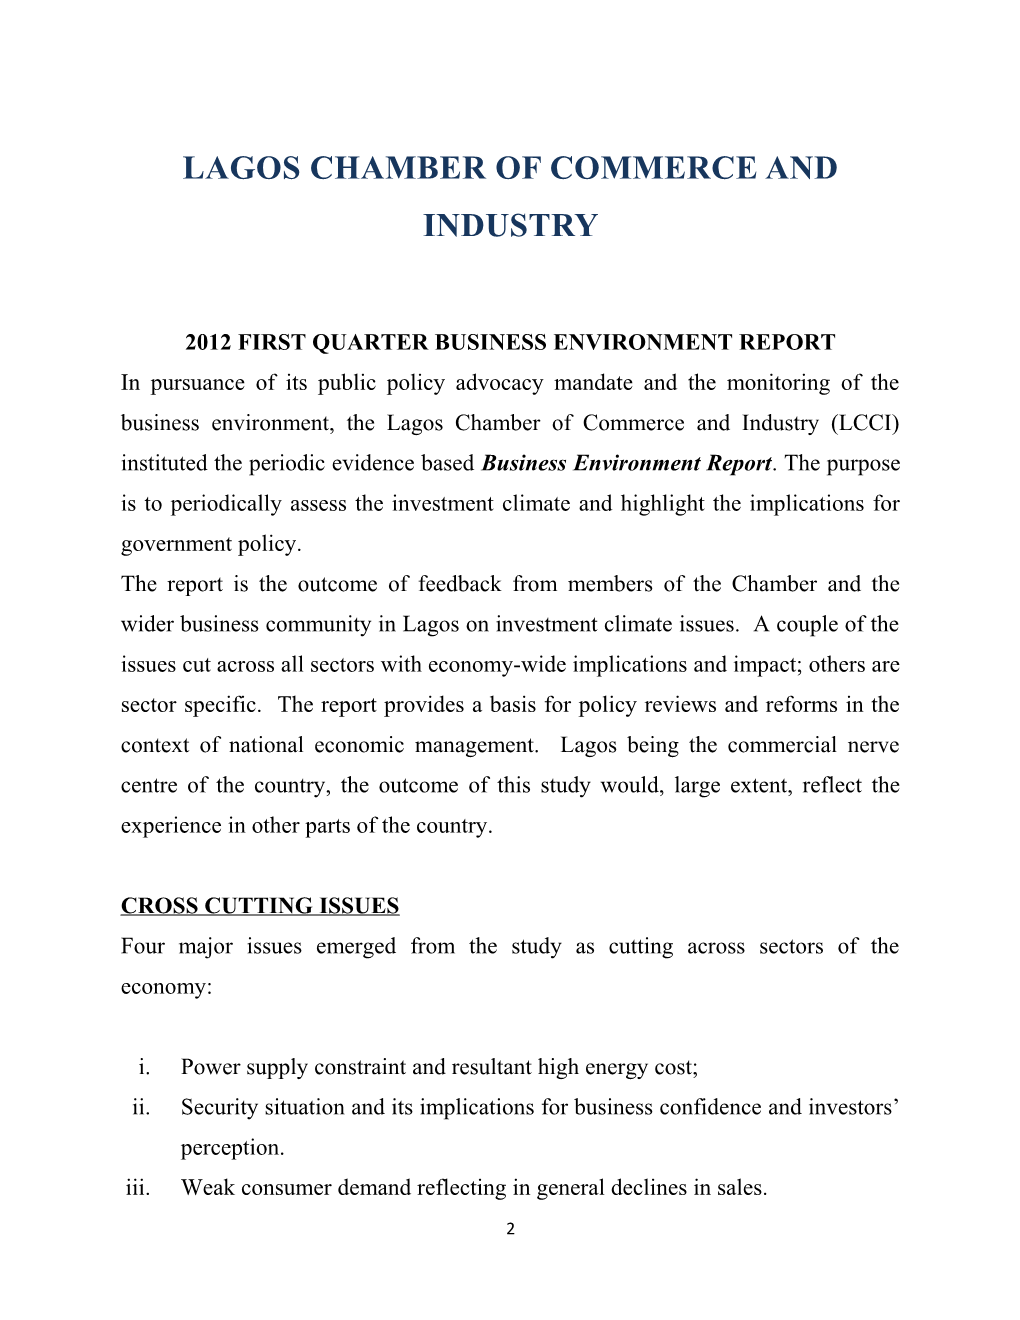 2012 First Quarter Business Environment Report